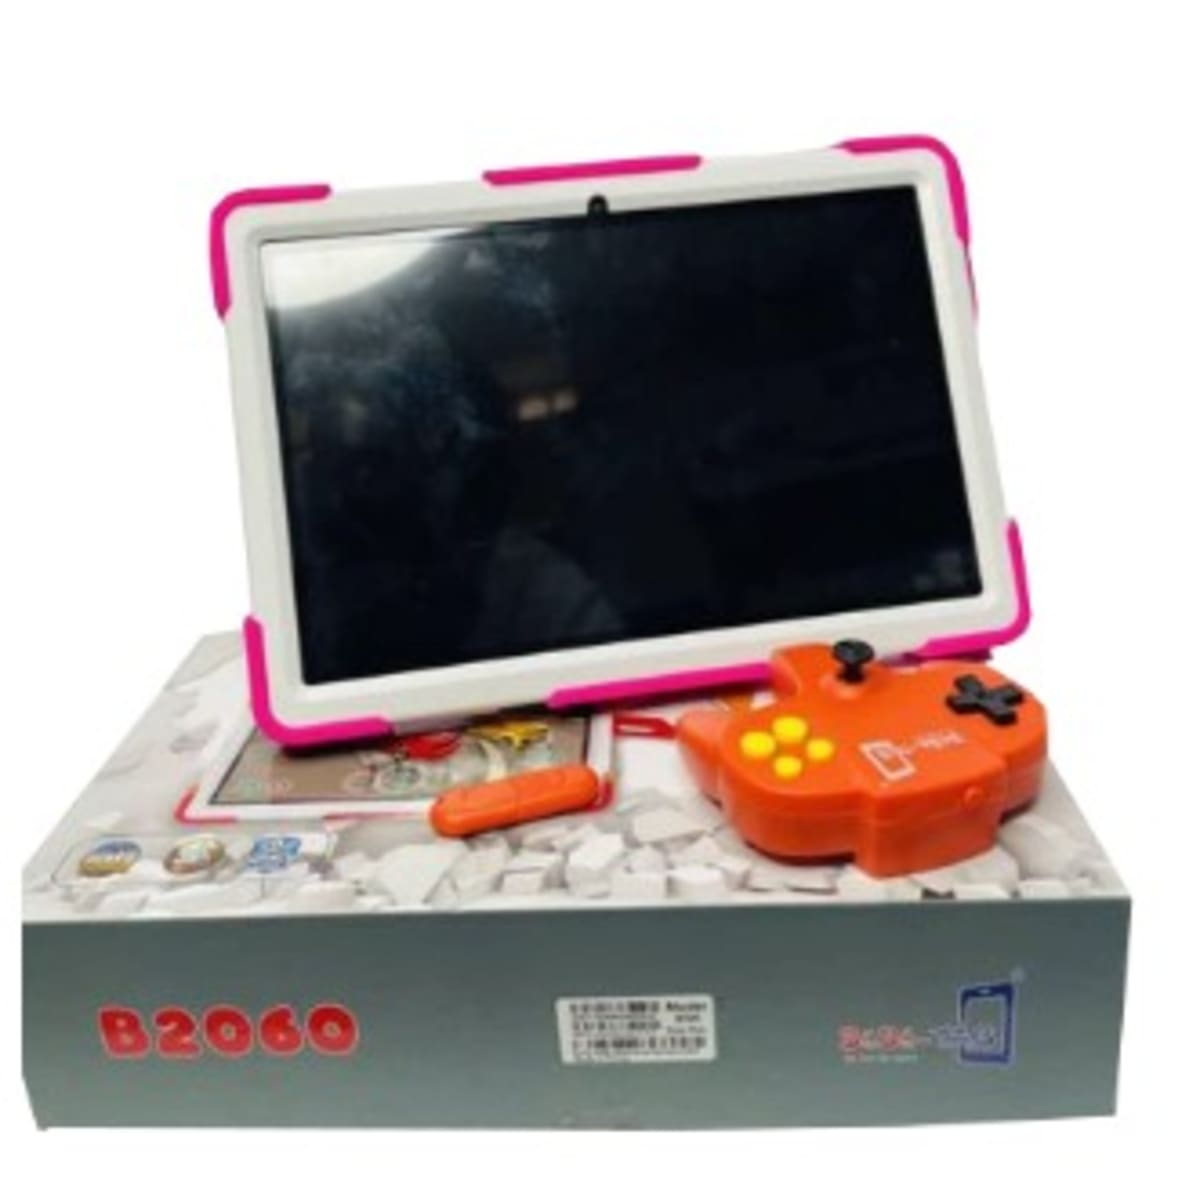 Tablette Bebe-Tab - Bobo-Kids - 4GB Ram/64GB